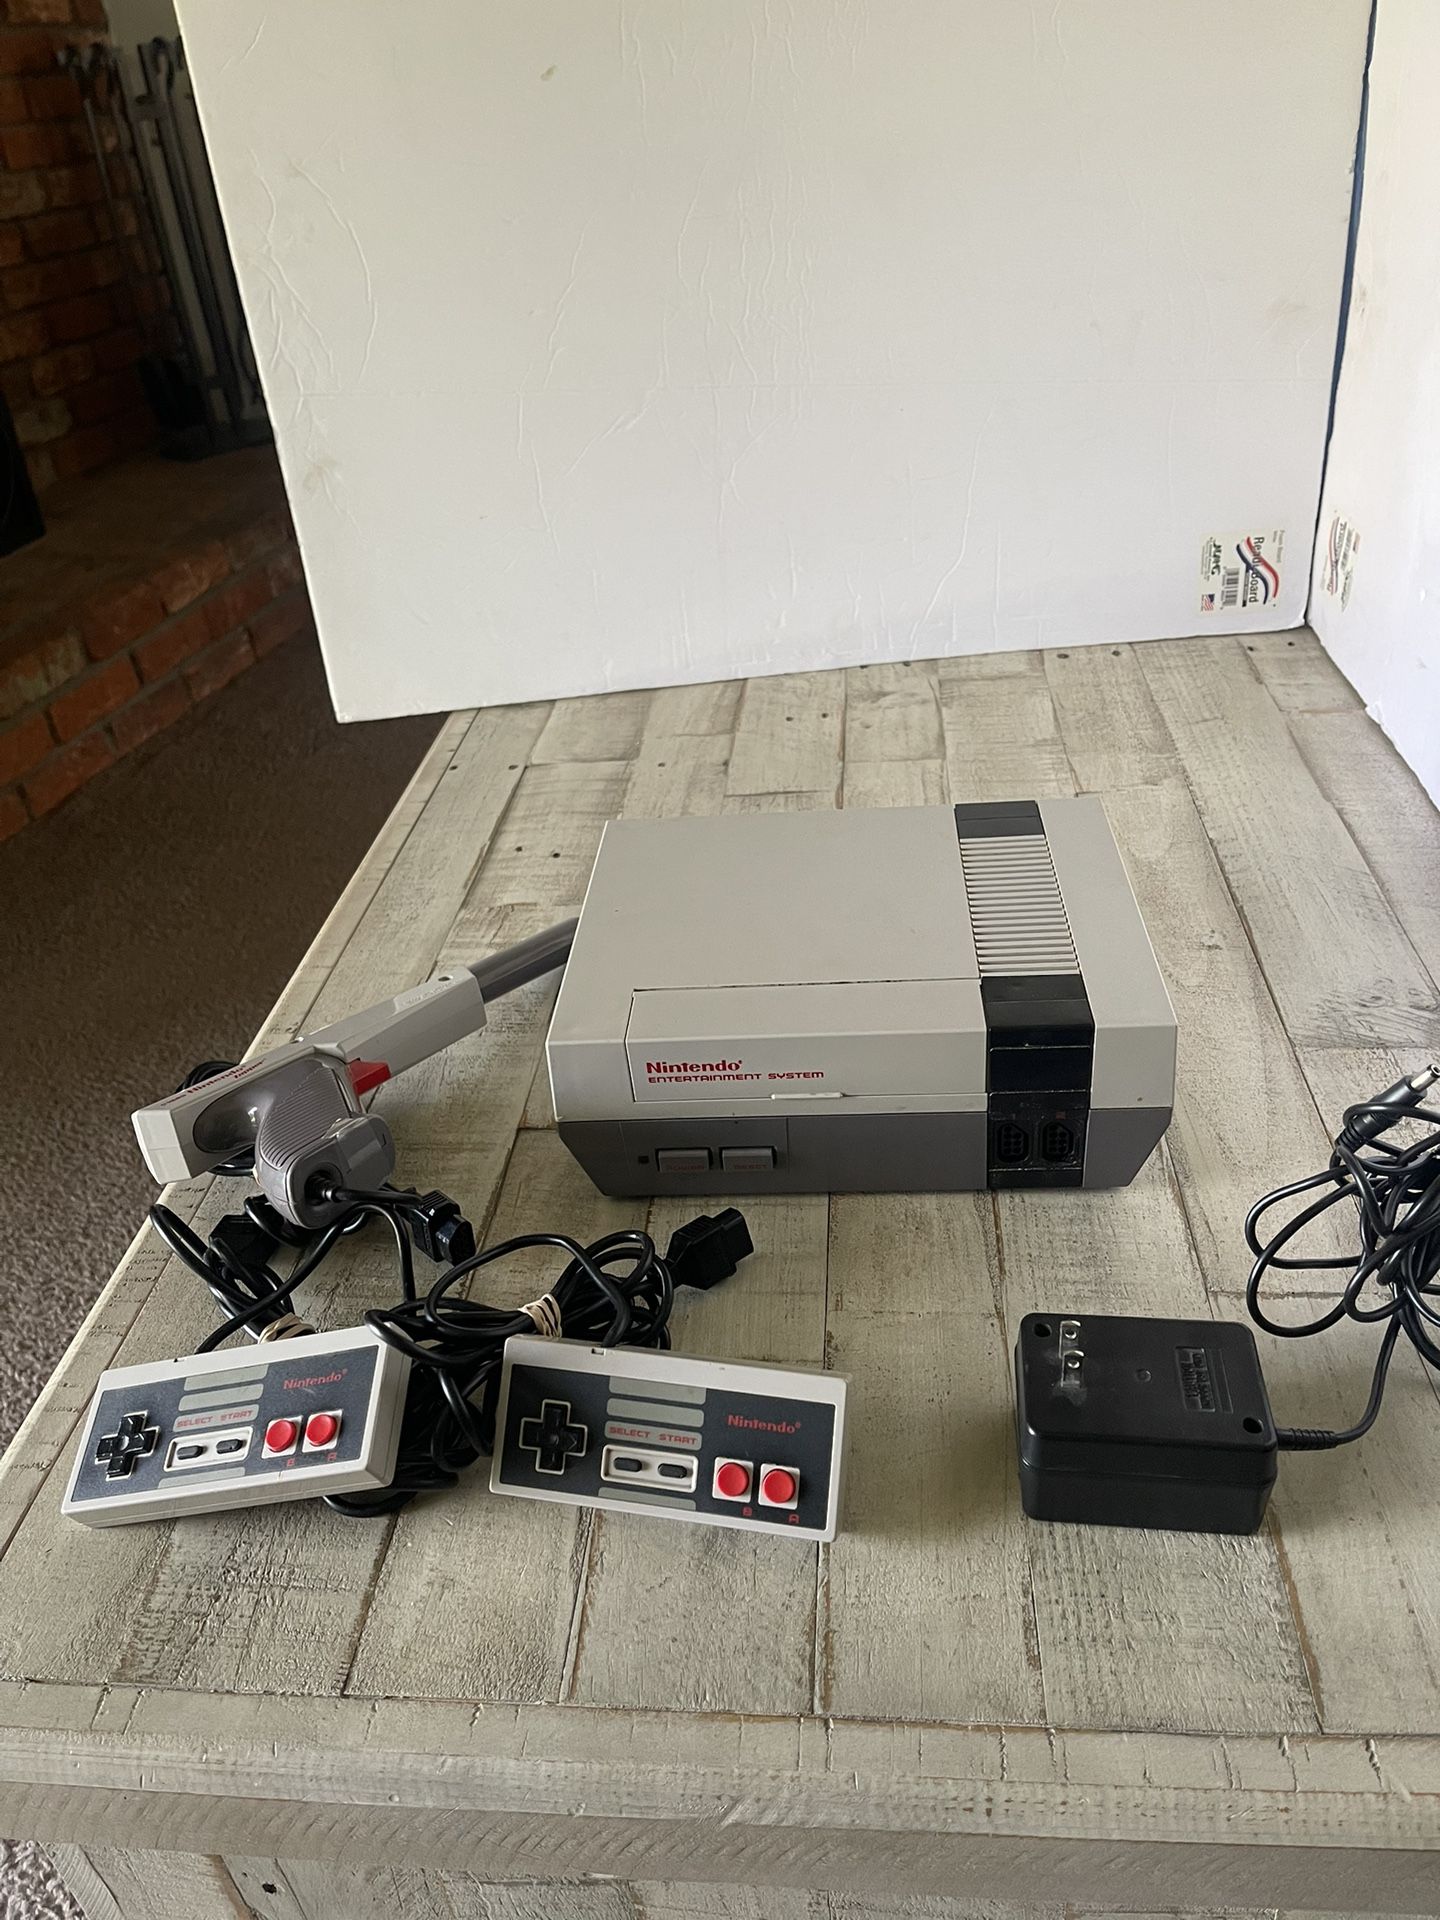 NES System